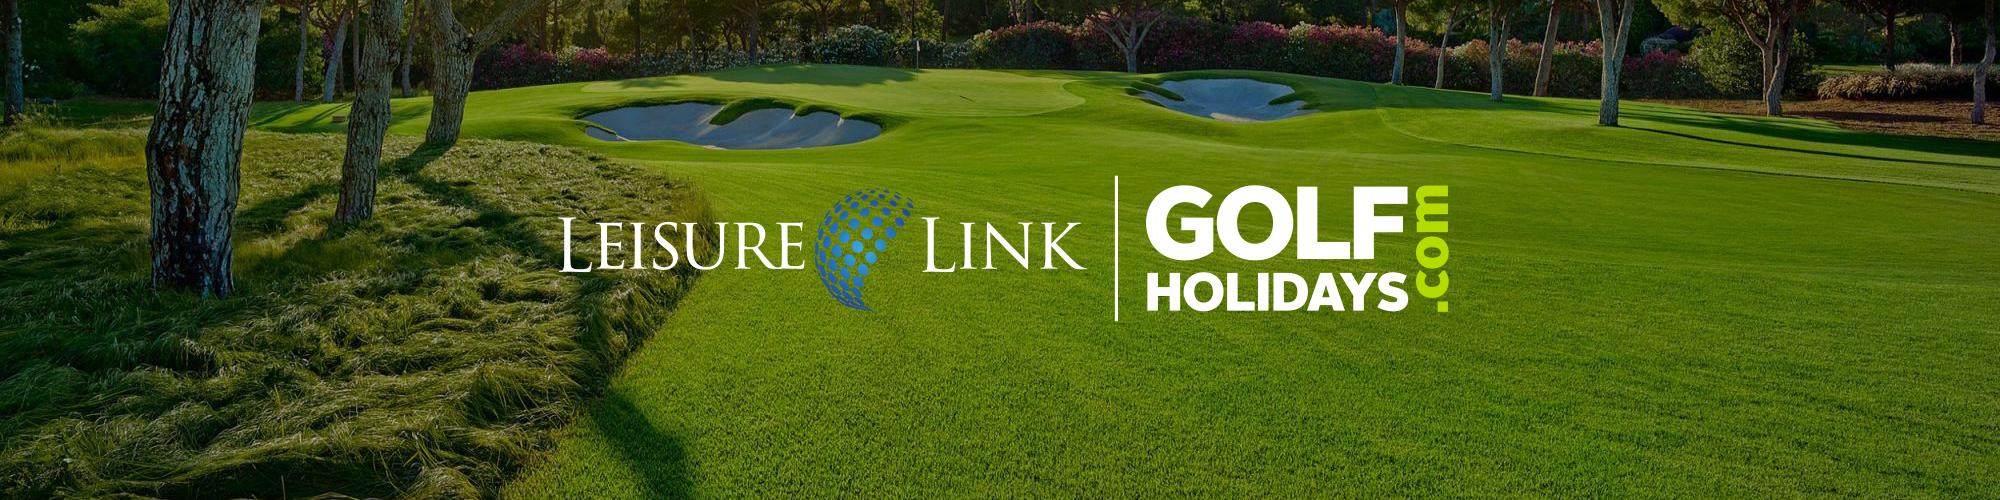 Leisure Link Golf Holidays Header